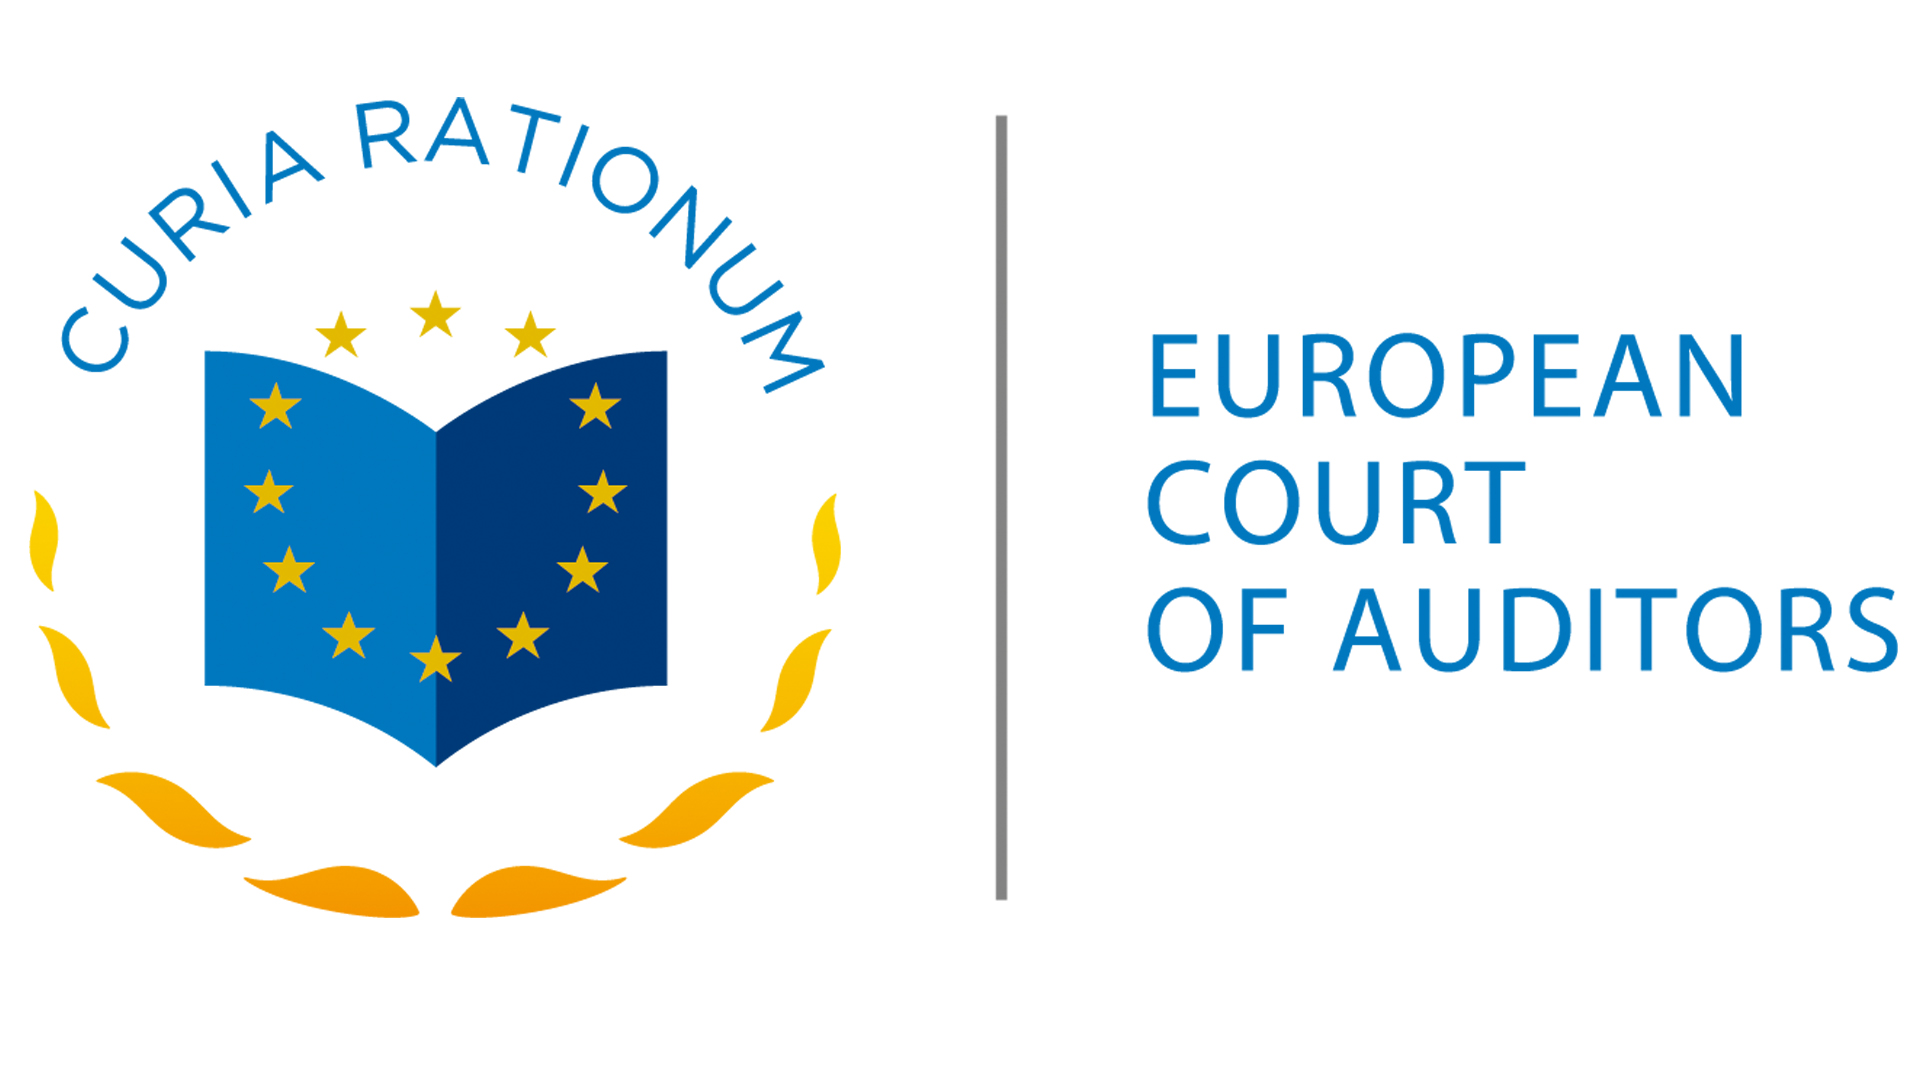 European Court of Auditors Postgraduate Research Grant Programme